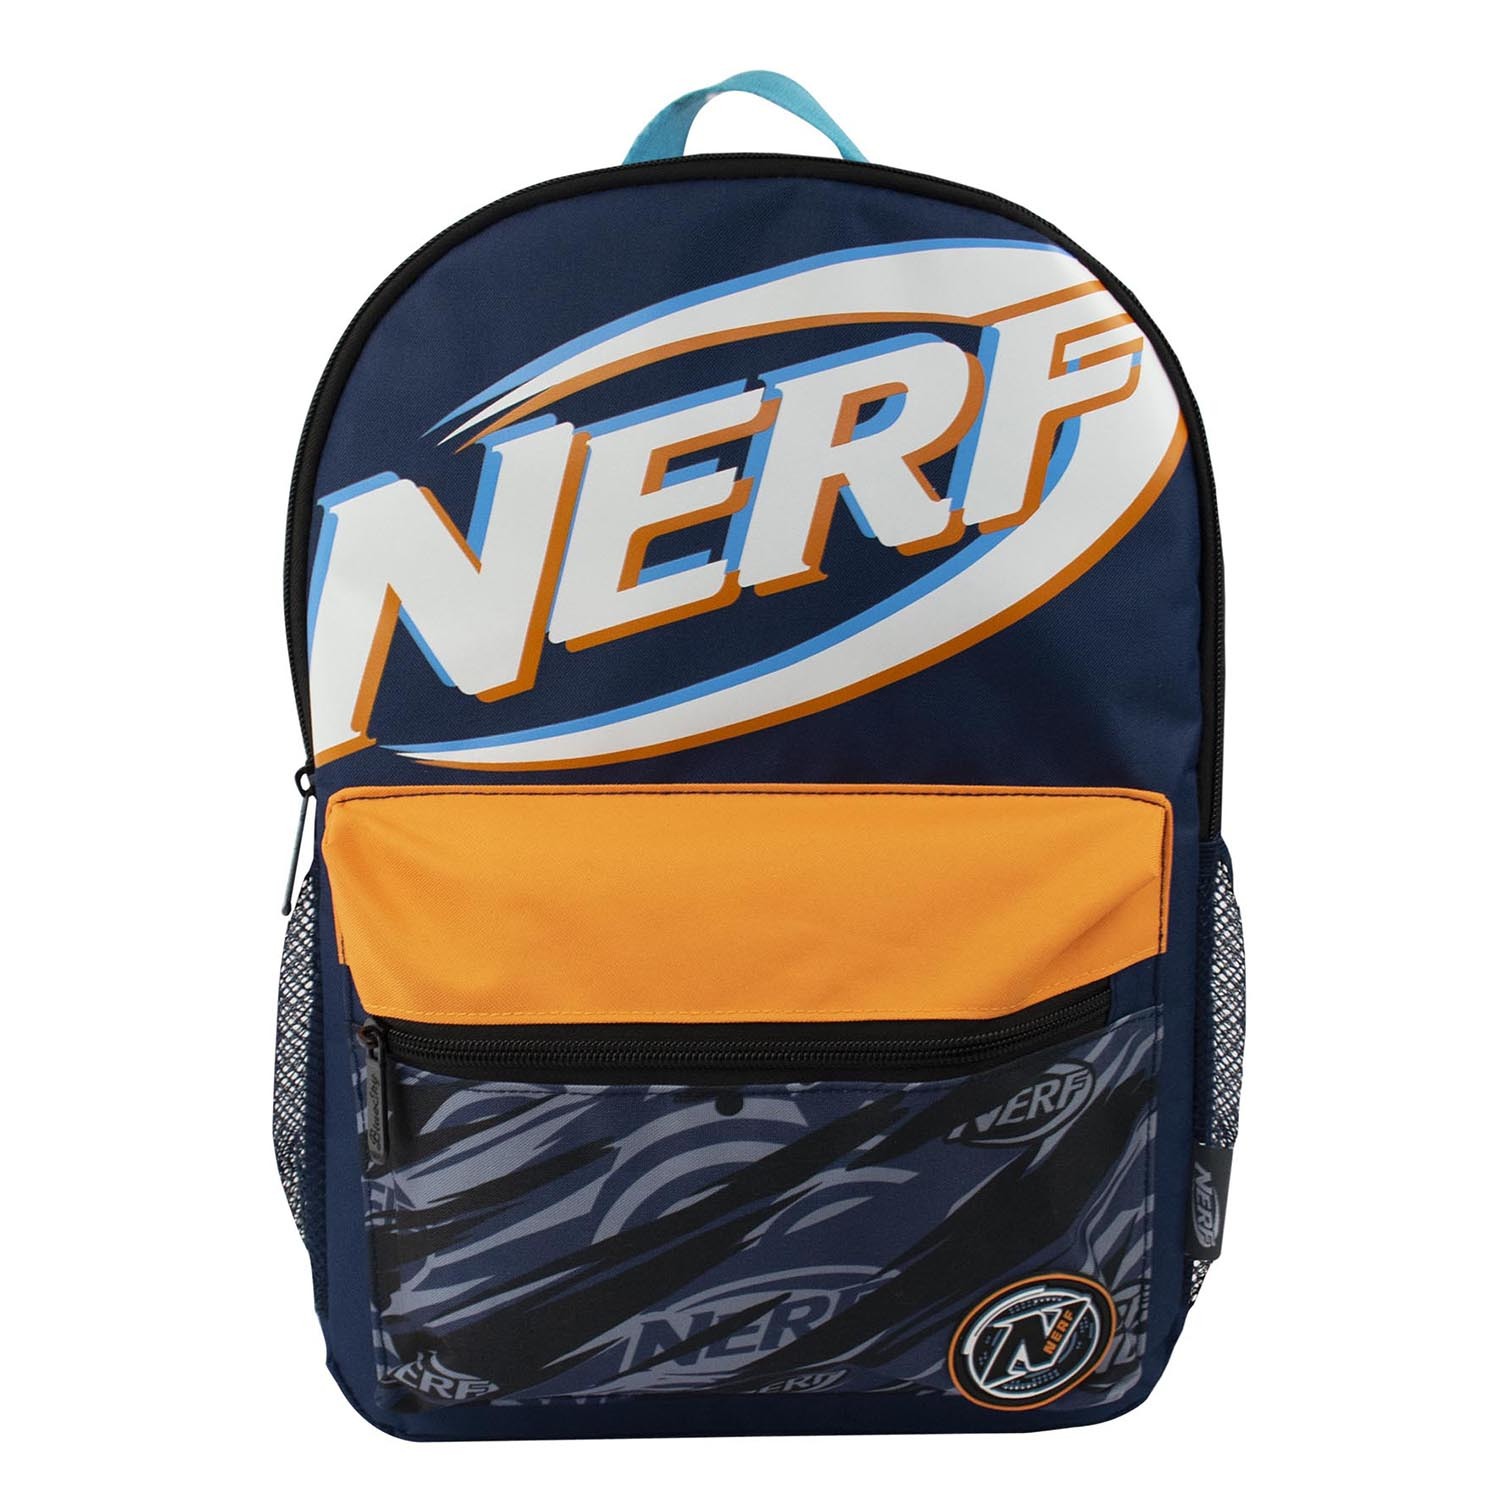 Nerf Backpack - Navy Image 1